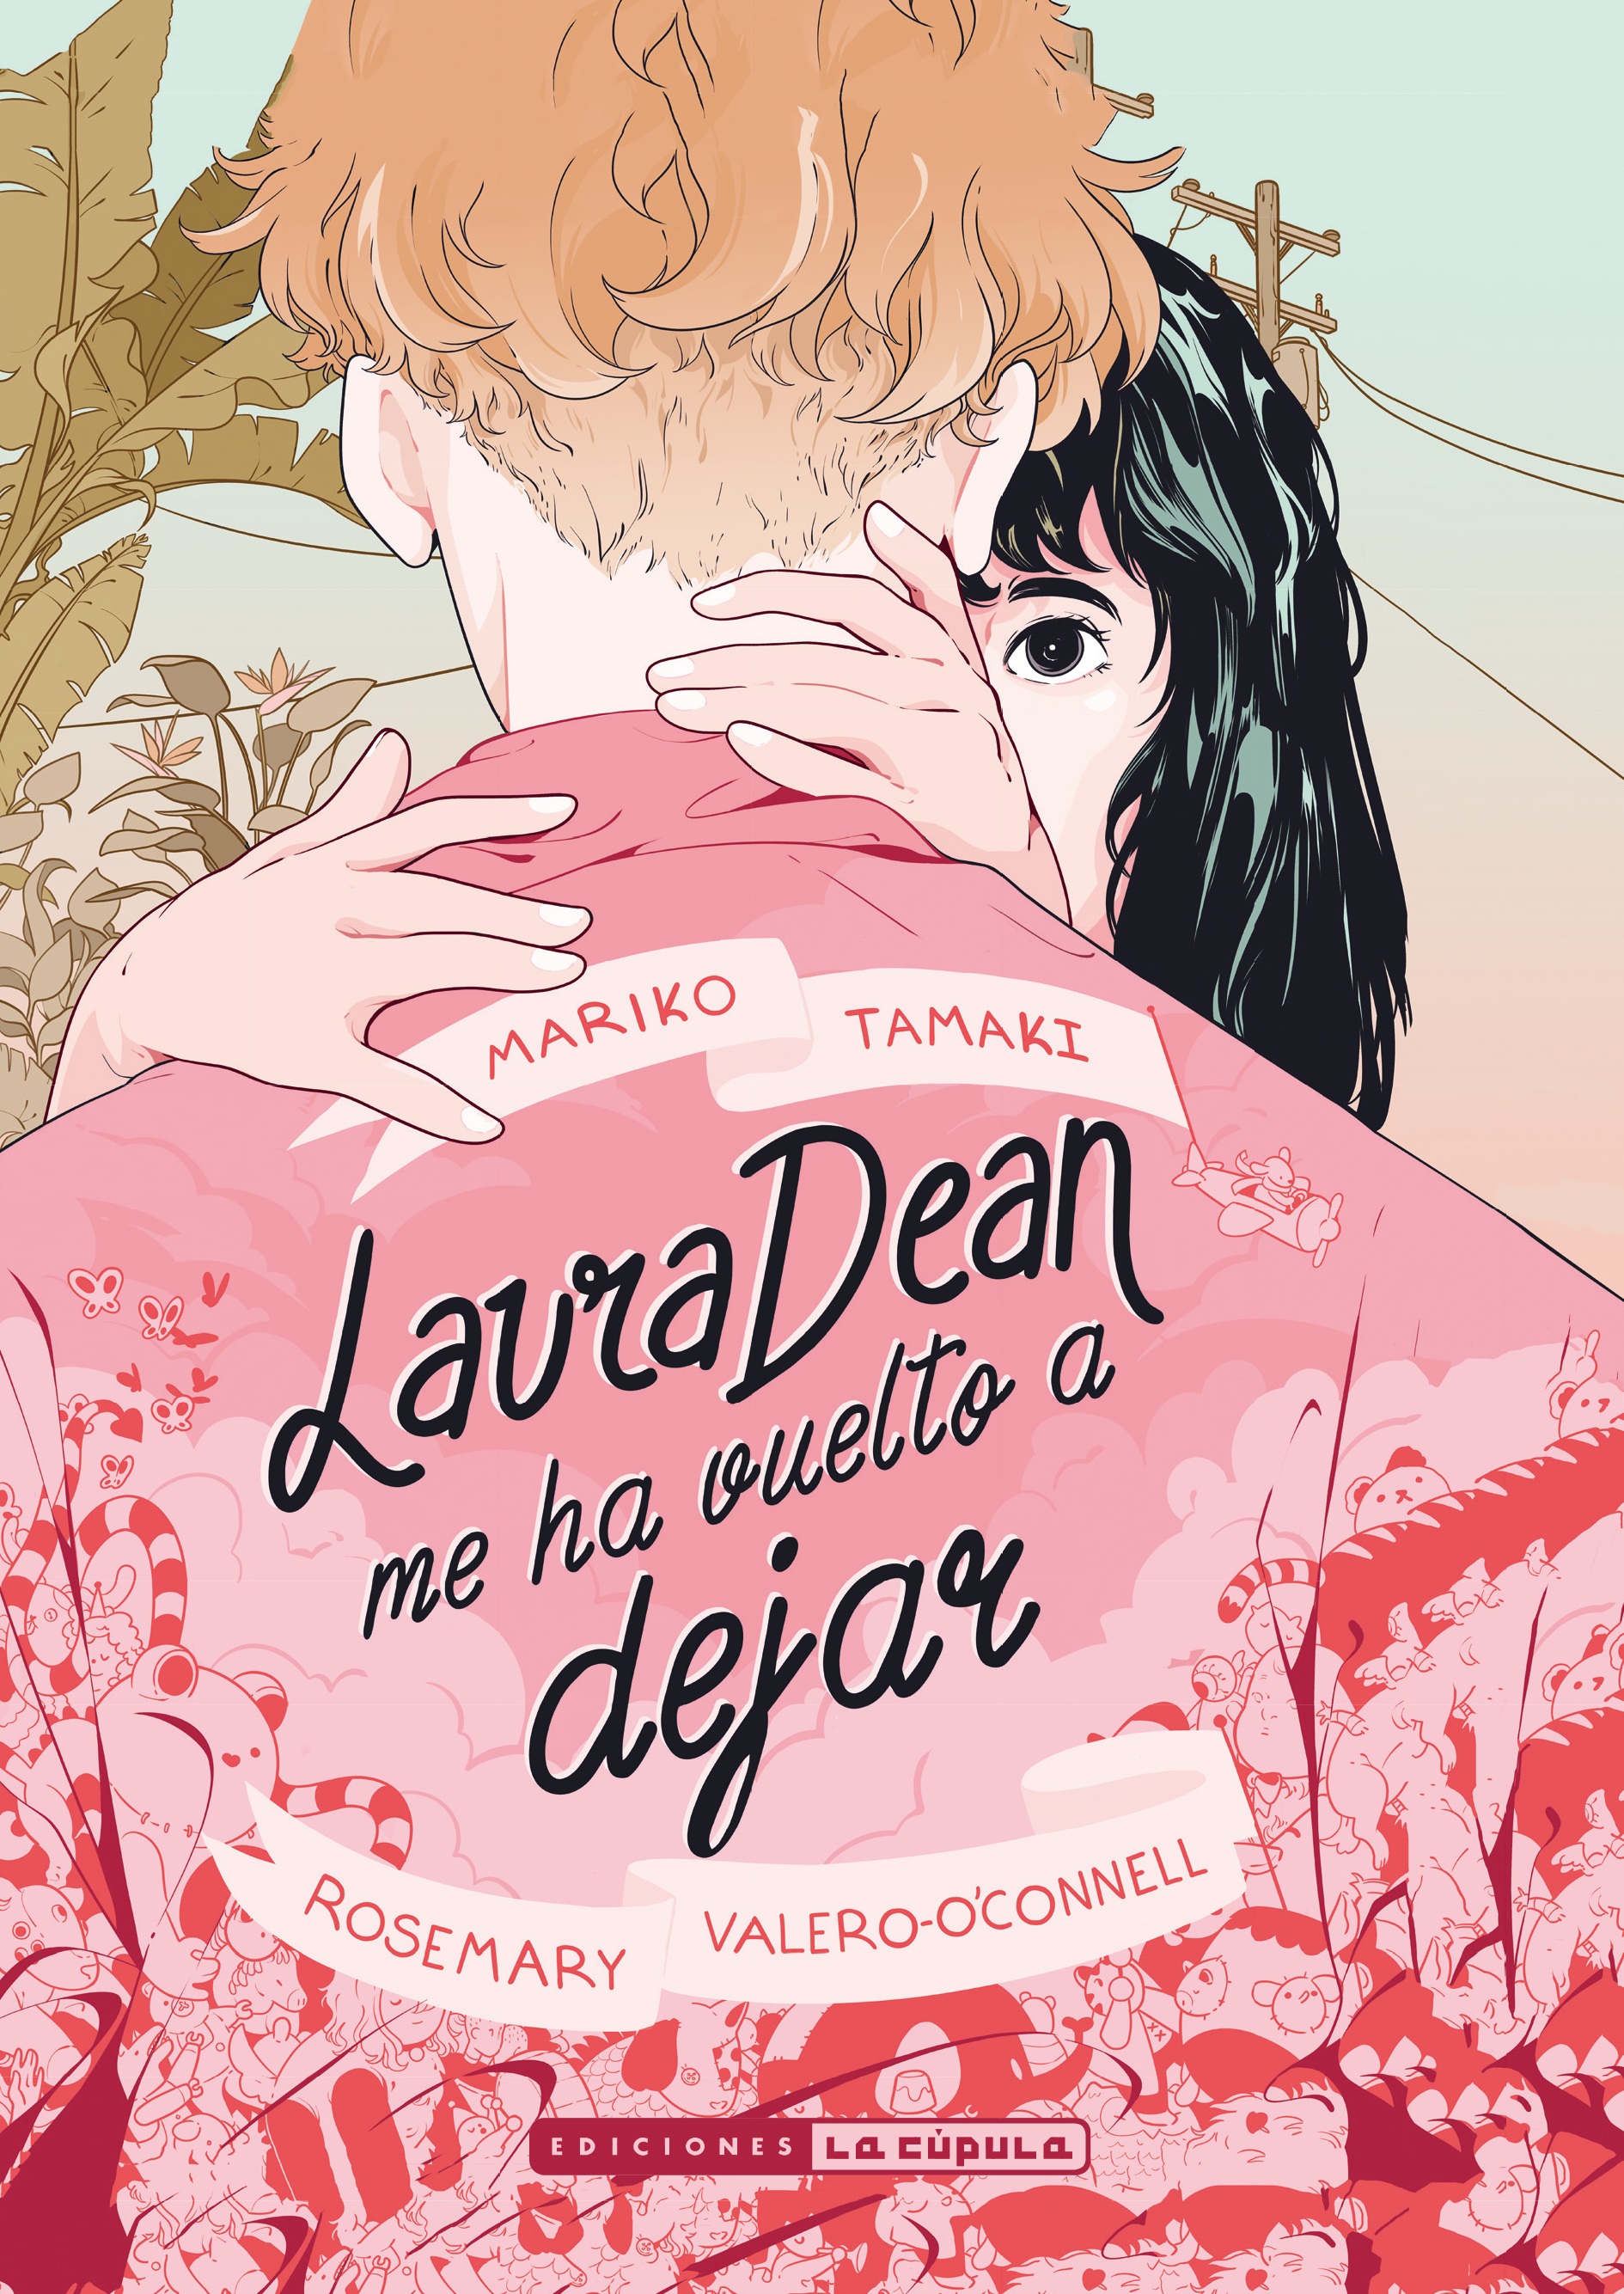 Rosemary Valero-O'Connell, Mariko Tamaki: Laura Dean me ha vuelto a dejar (GraphicNovel, Español language, 2020, Ediciones La Cúpula)